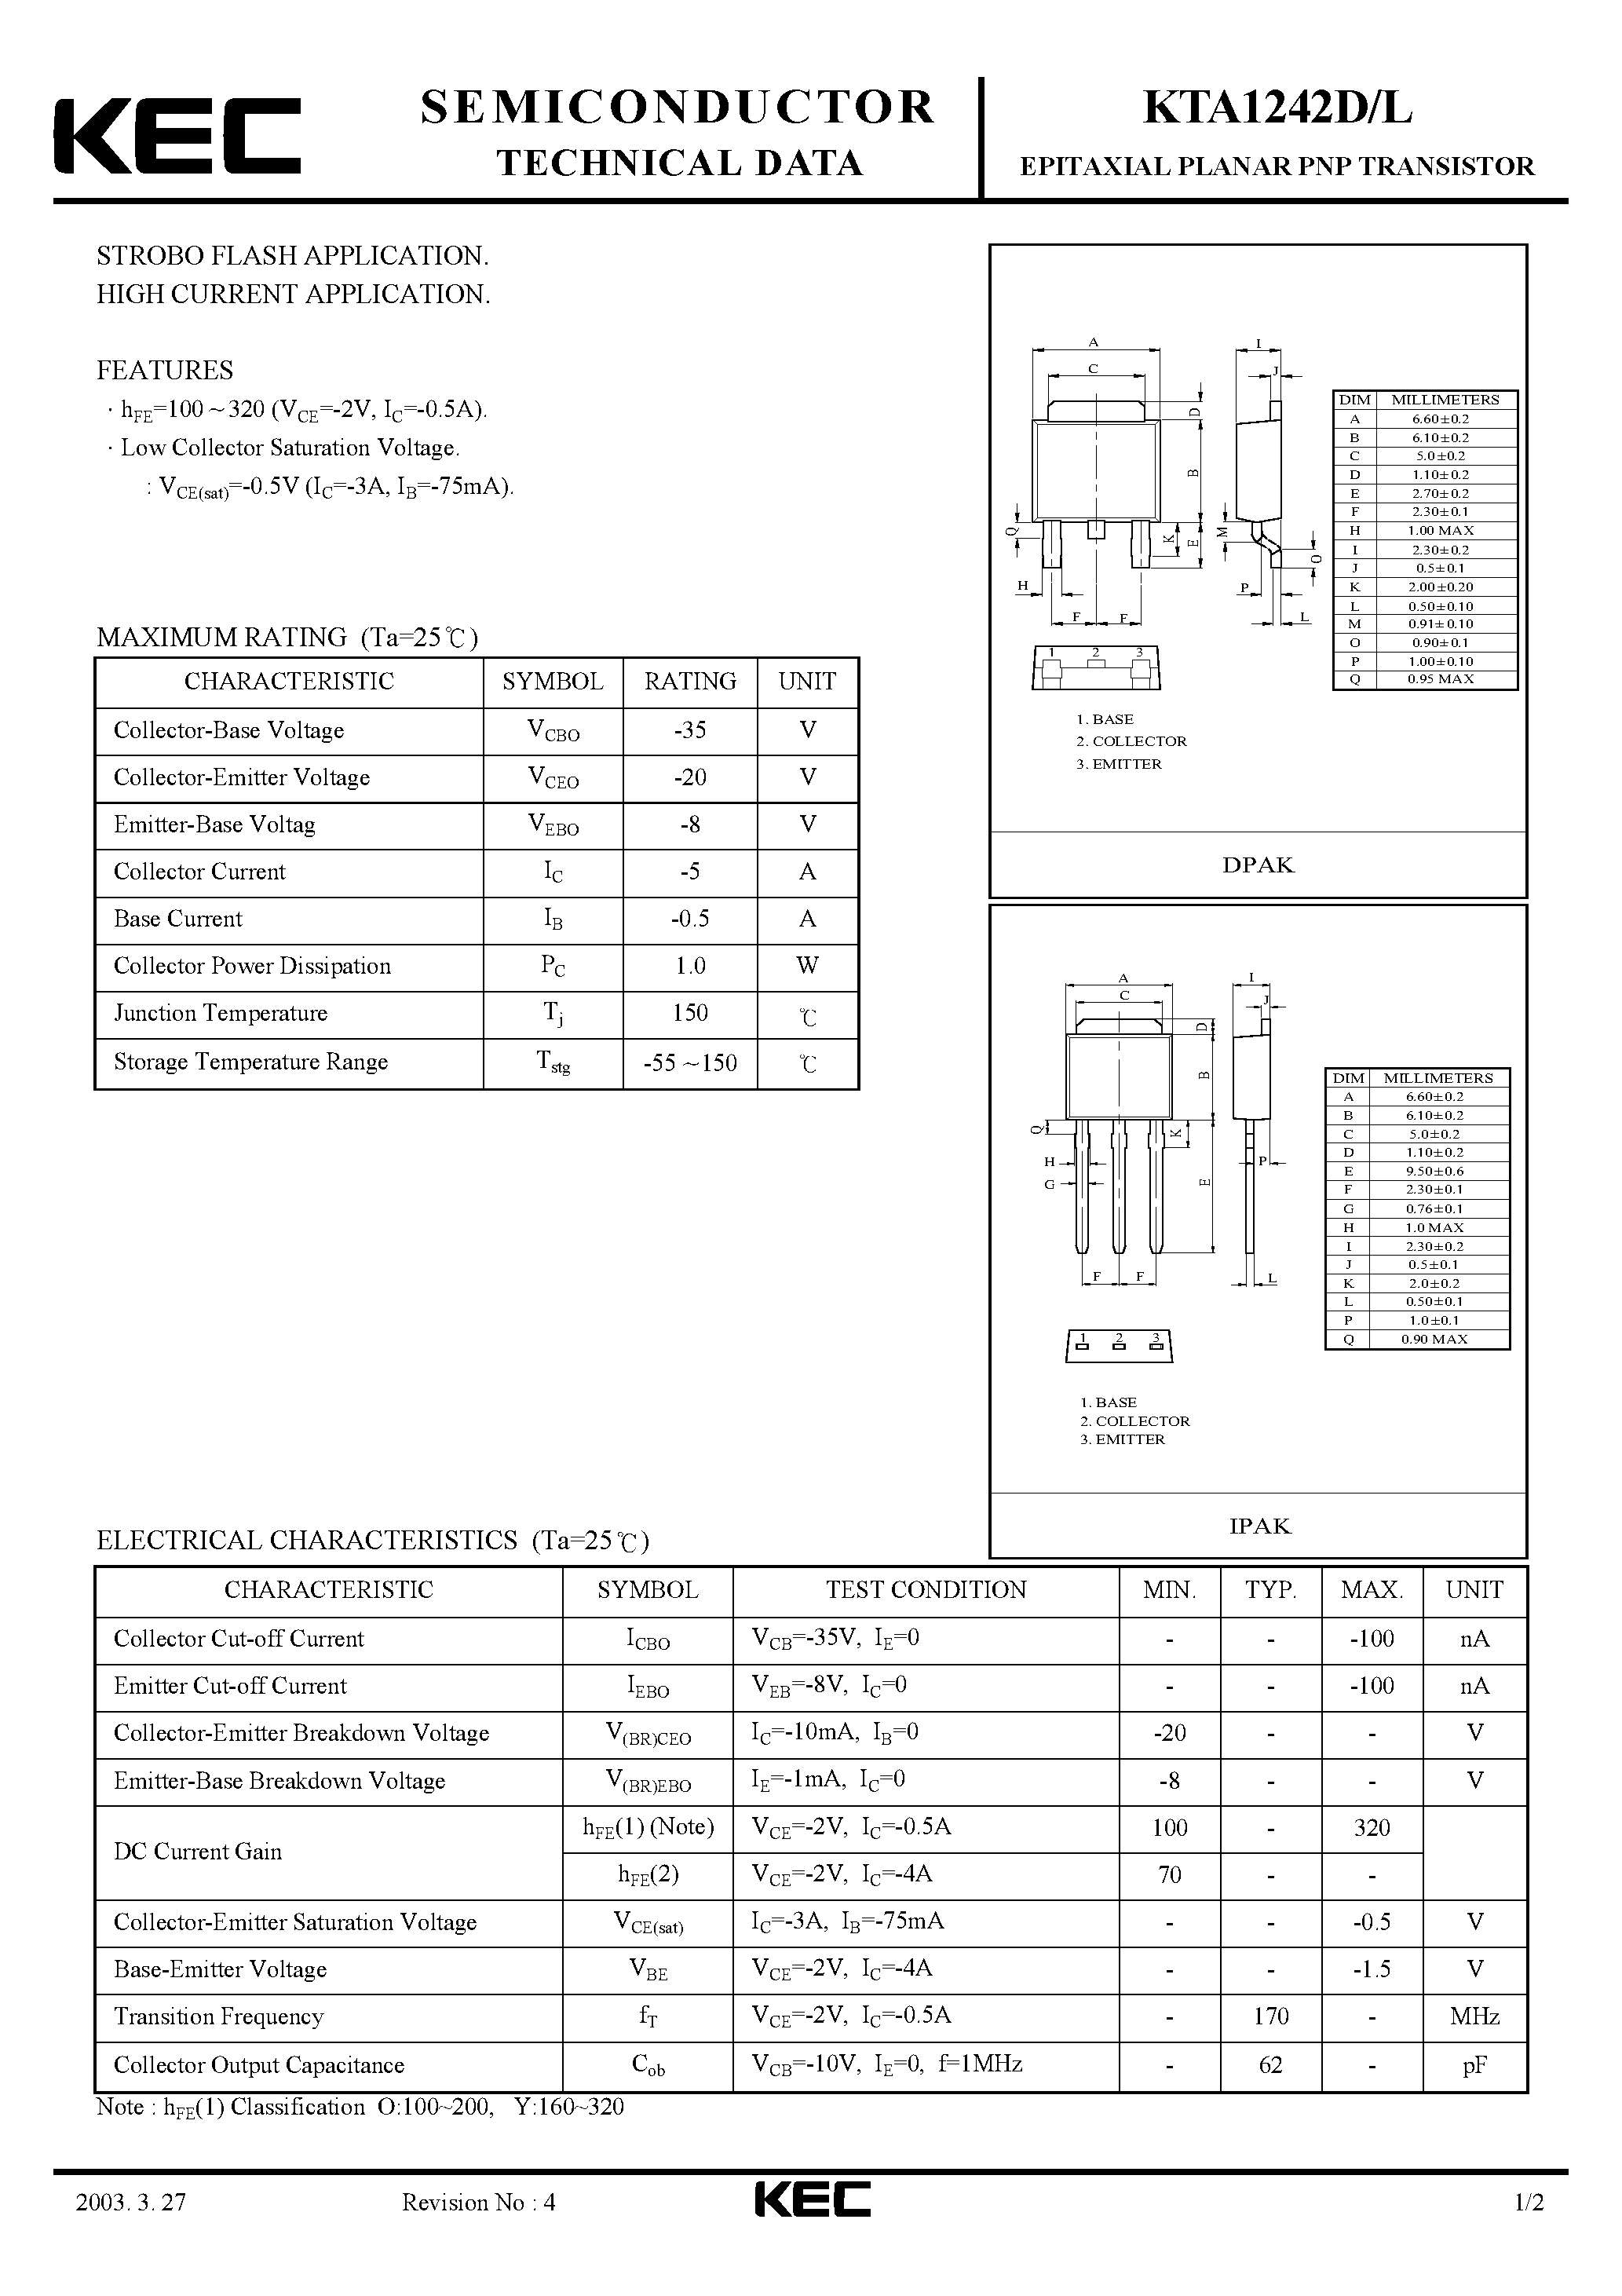 Datasheet KTA1242D - EPITAXIAL PLANAR PNP TRANSISTOR (STROBO FLASH/ HIGH CURRENT) page 1